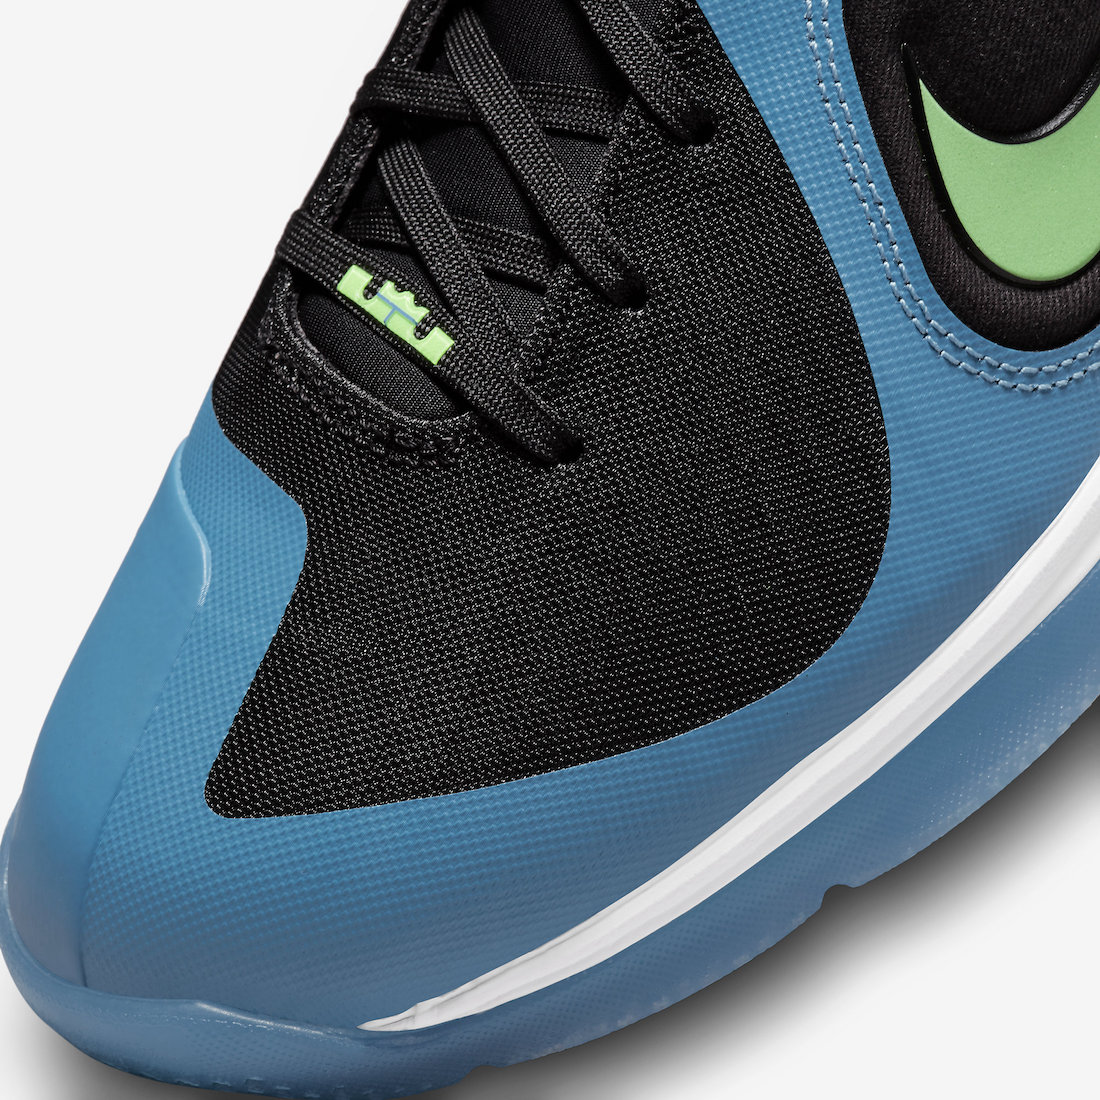 Nike-LeBron-9-South-Coast-DO5838-001-Release-Date-6